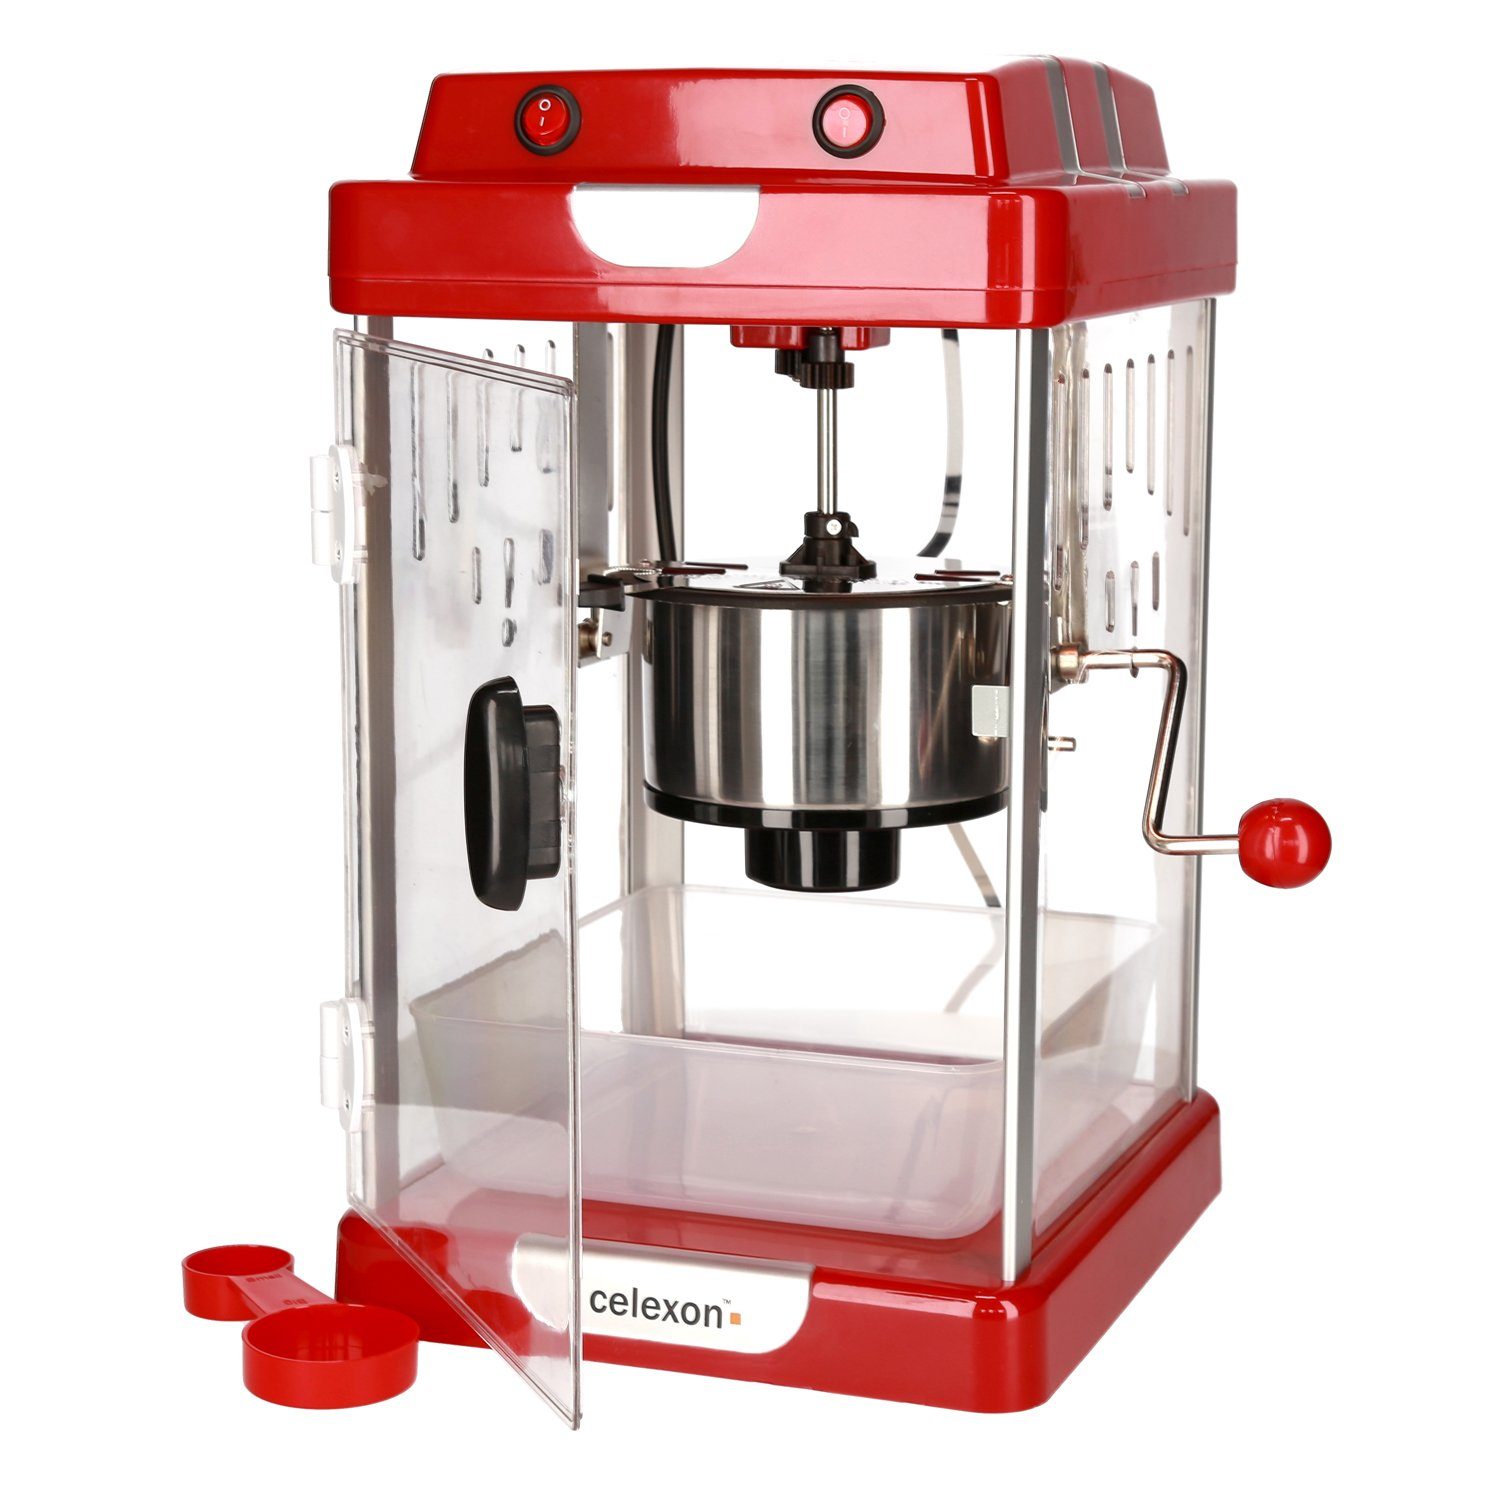 Celexon Popcornmaschine CinePop CP1000, 24,5x28x43 Rot Füllmenge 350 cm, 60g, Watt